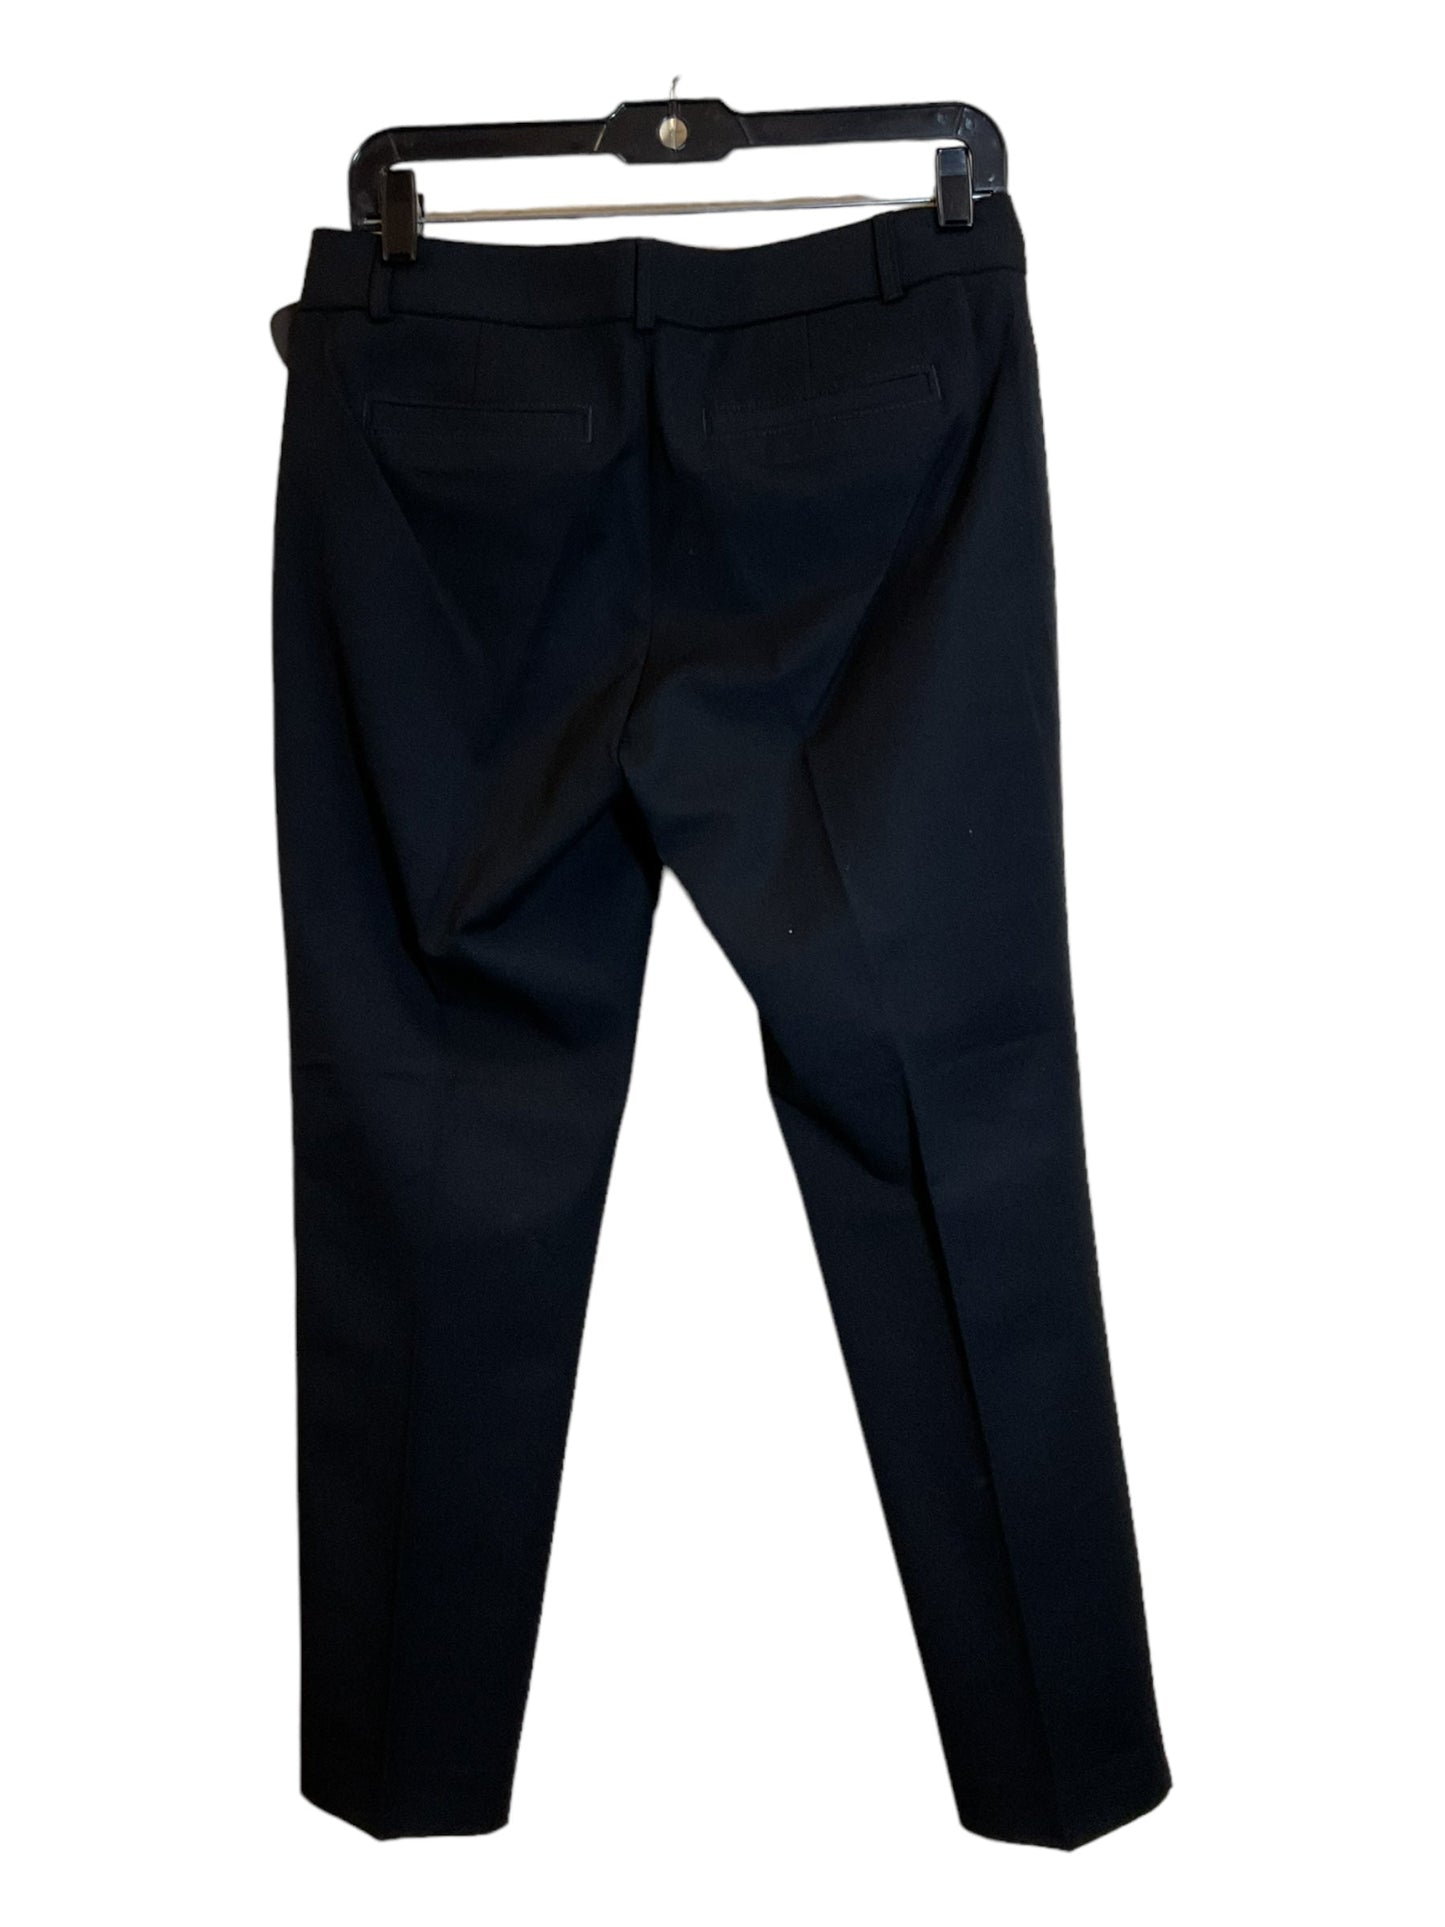 Black Pants Chinos & Khakis Banana Republic, Size 6